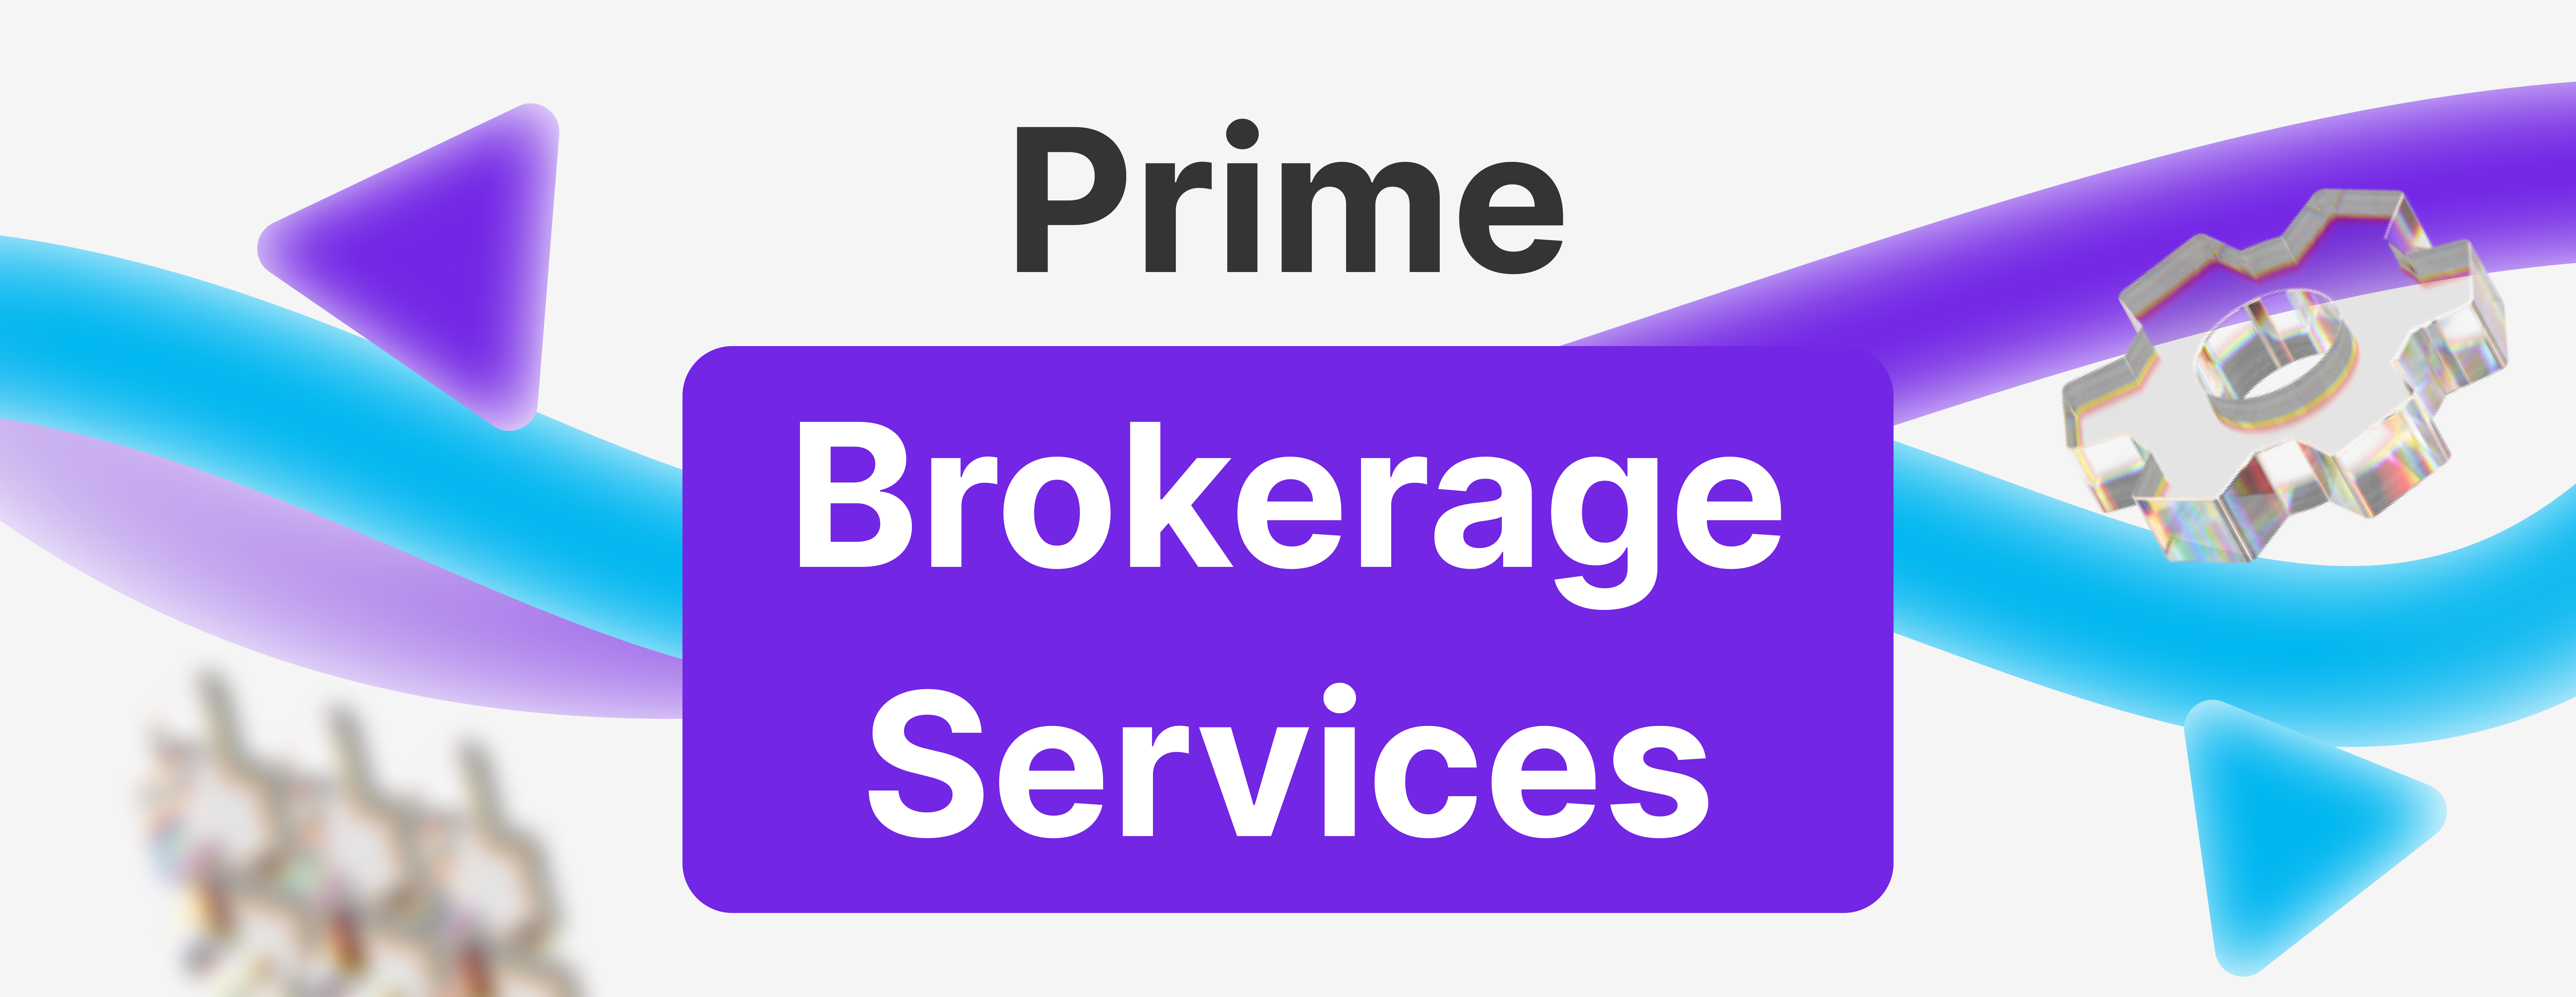 Prime Brokerage Services